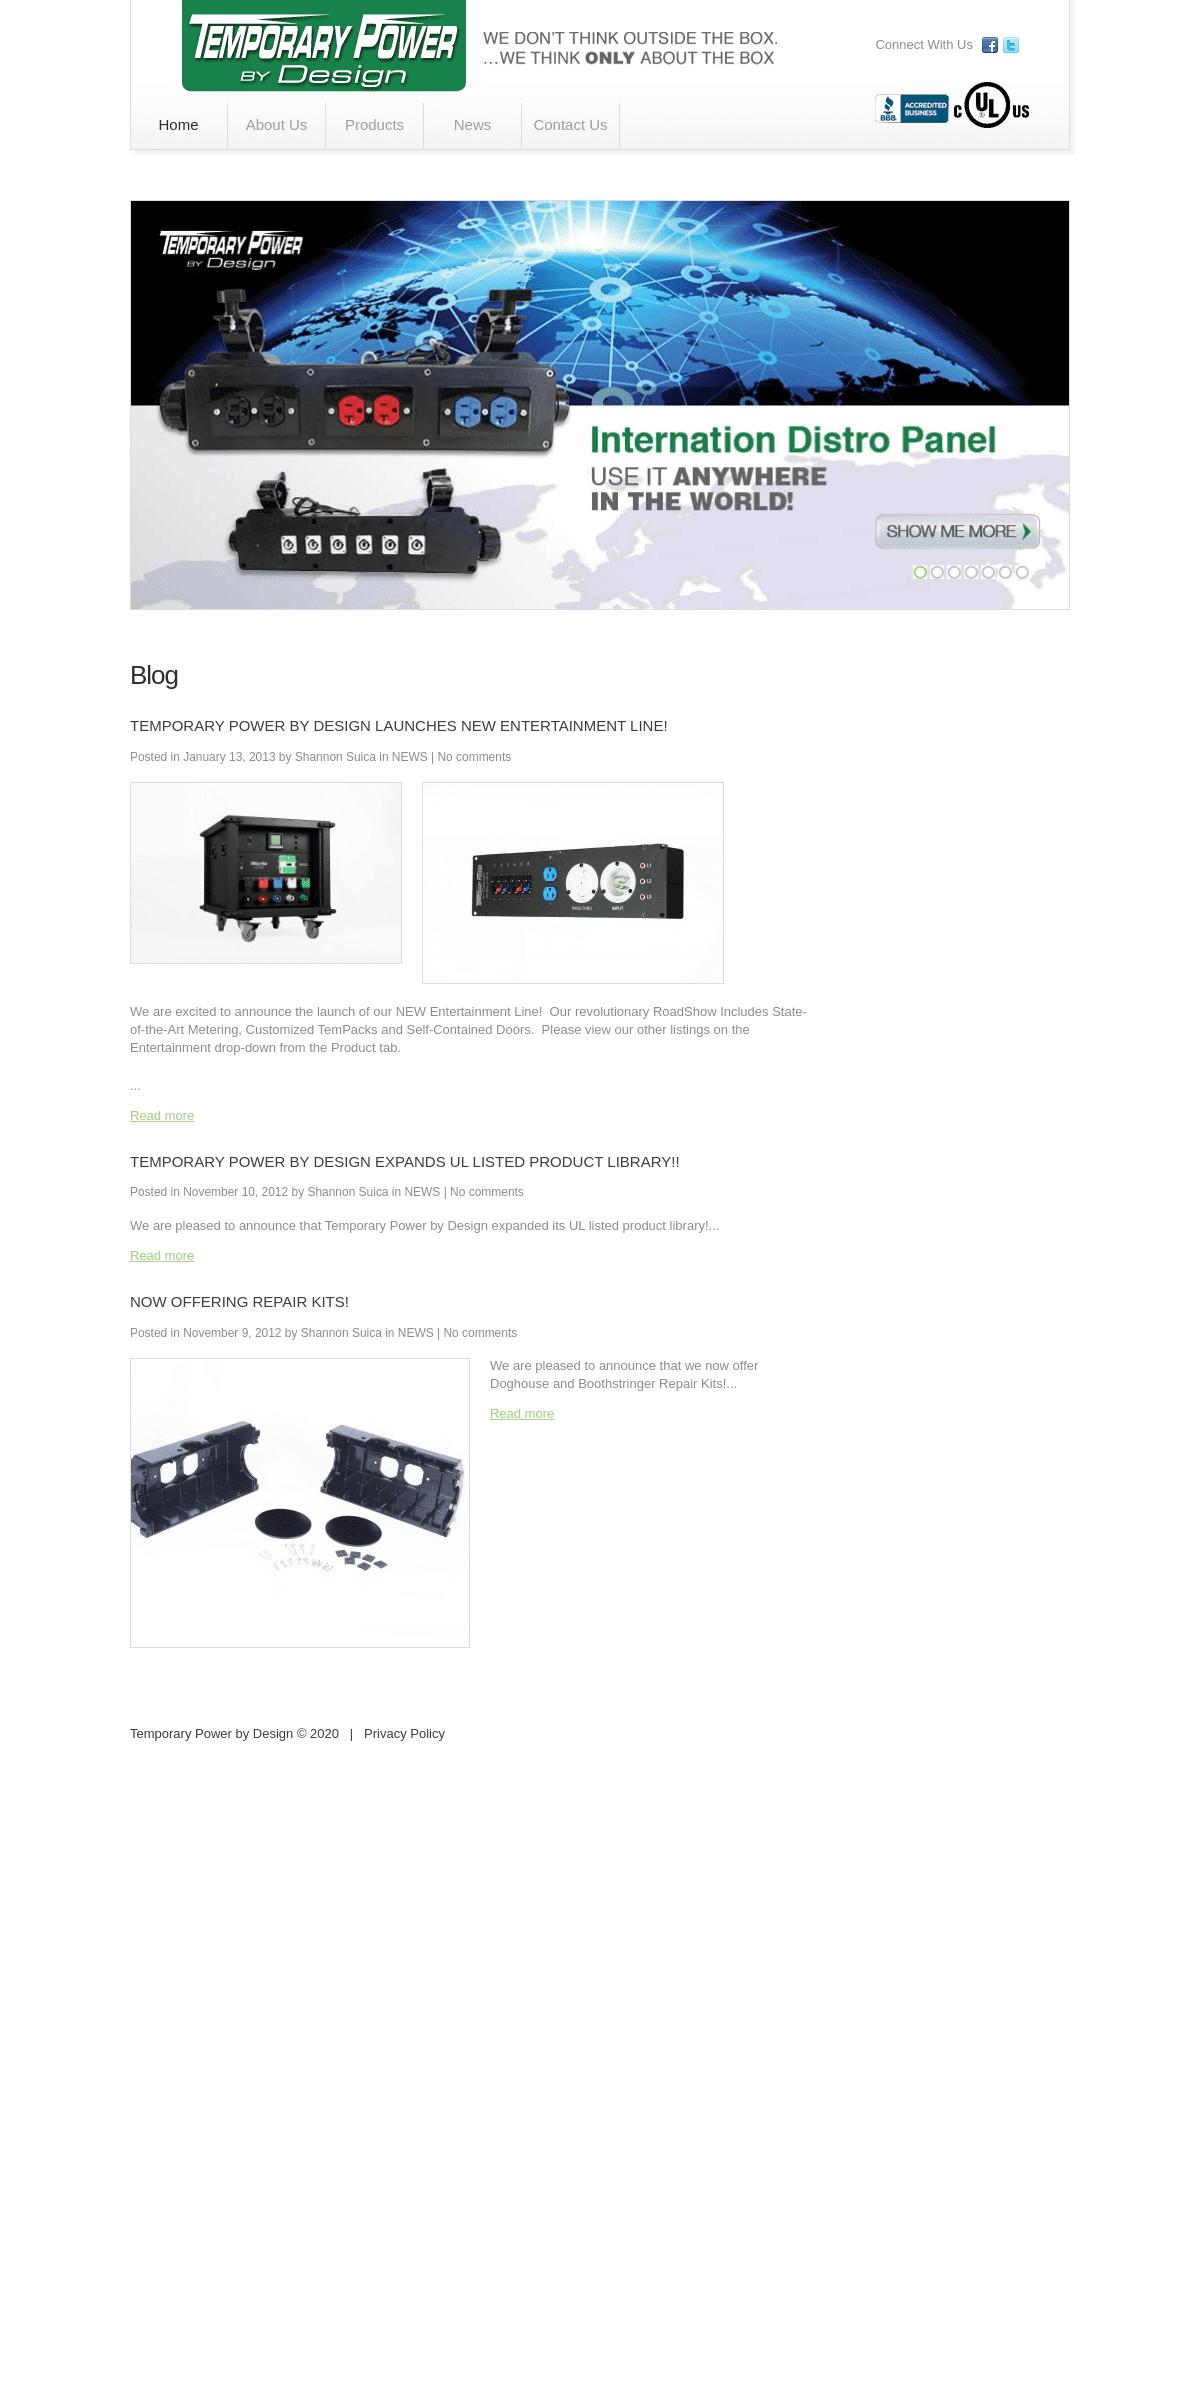 A complete backup of temporarypowerbydesign.com